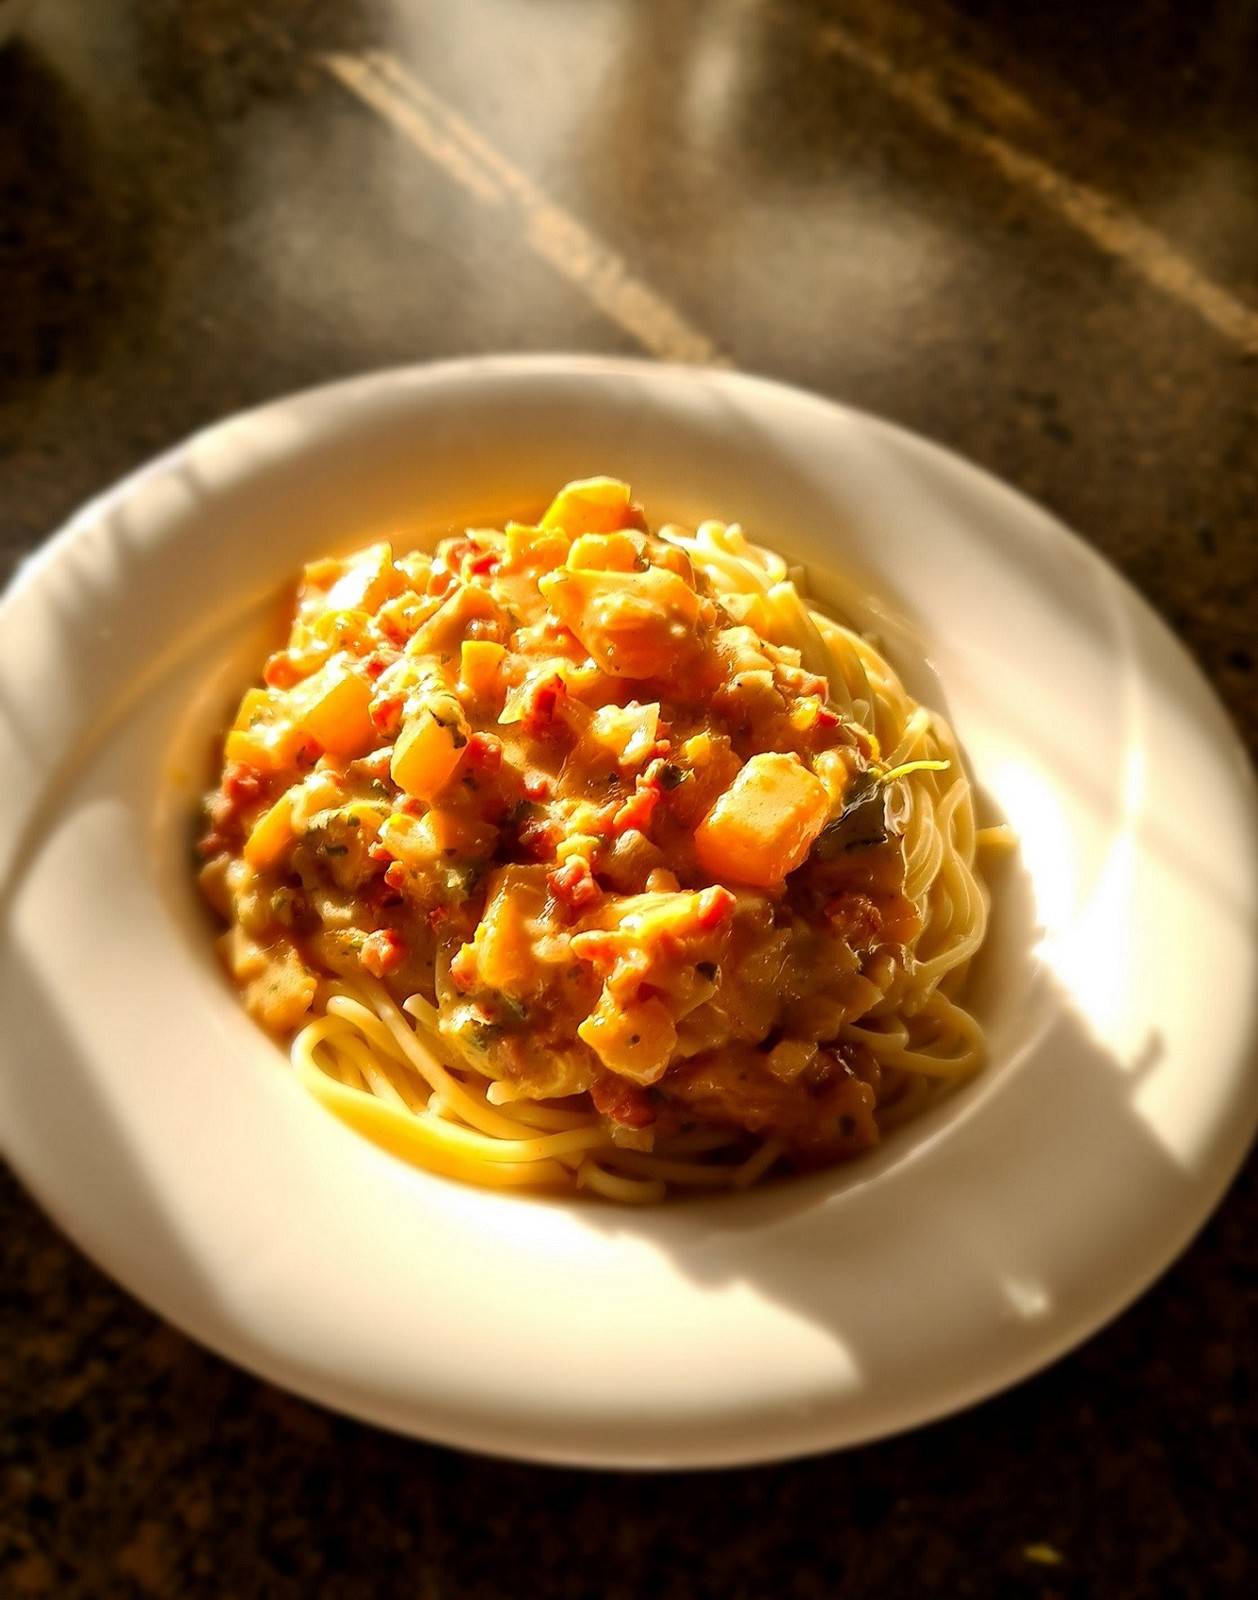 Spaghetti mit Kürbis-Speck-Sugo